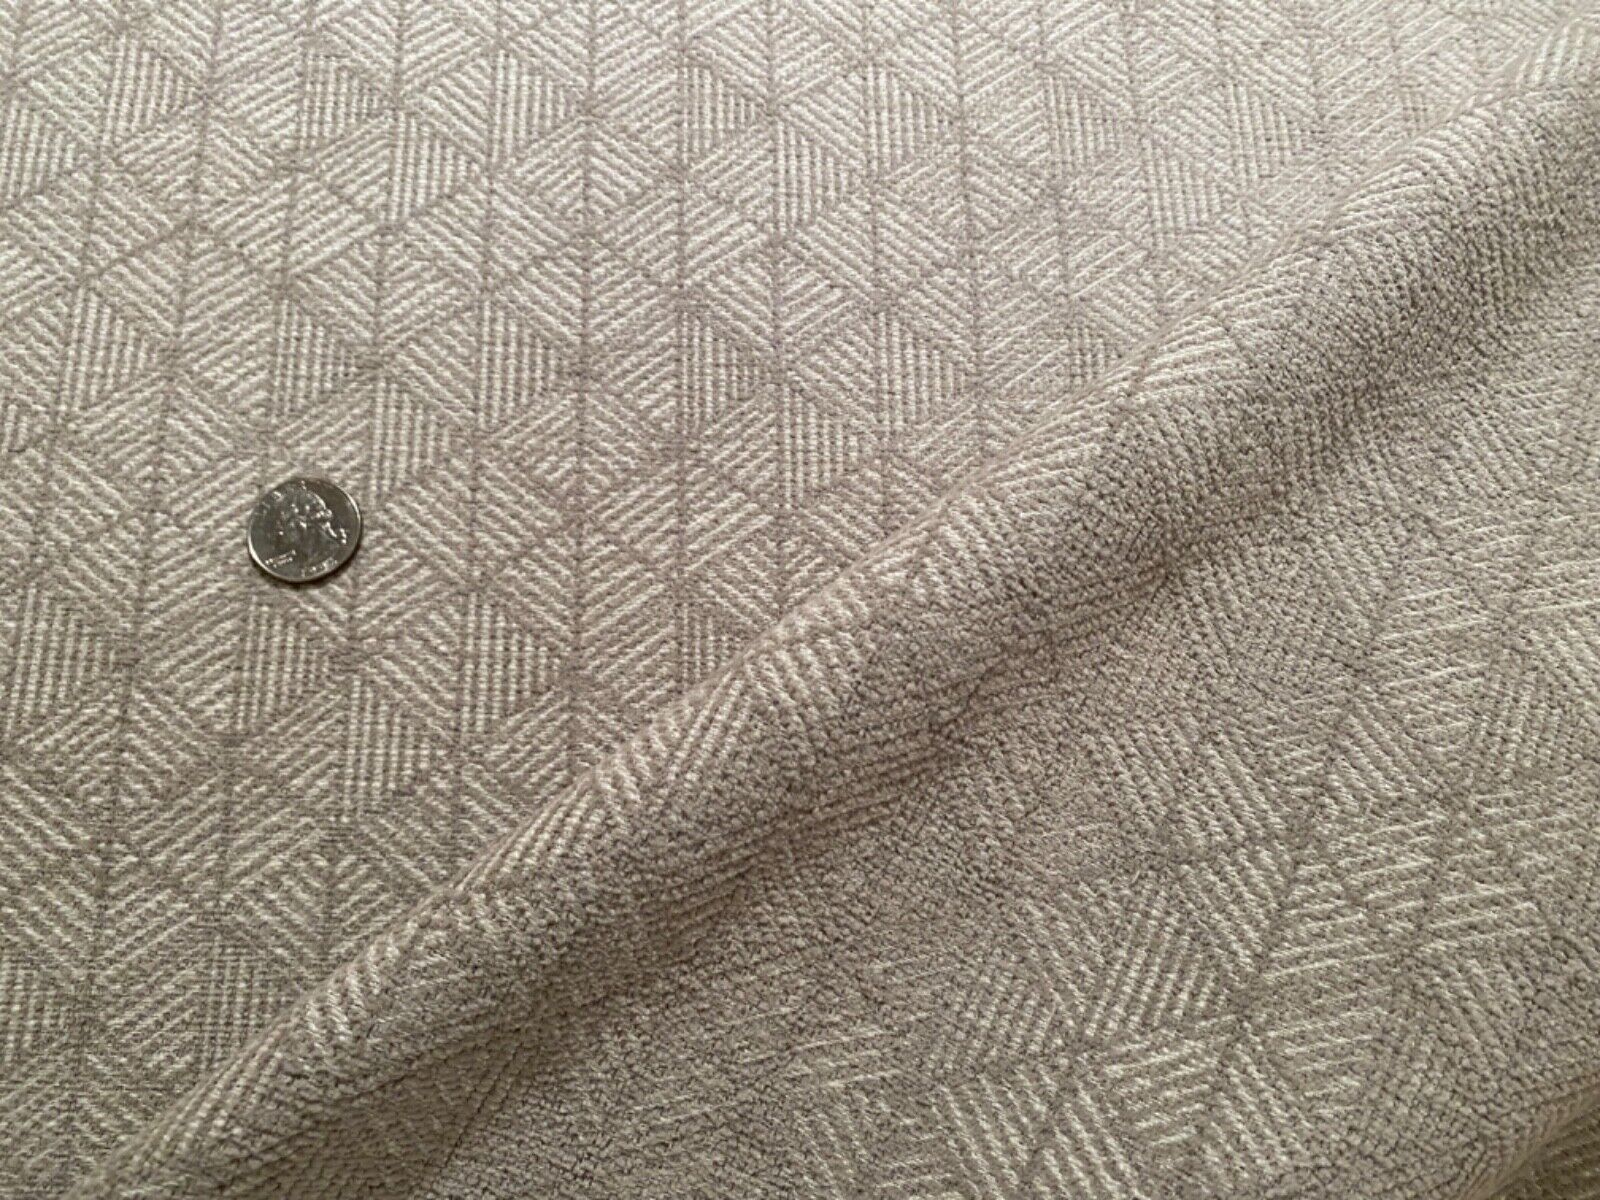 13YD KRAVET DESIGN 35697. 16 Geometric Stain Release Finish Fabric $1781 Retail